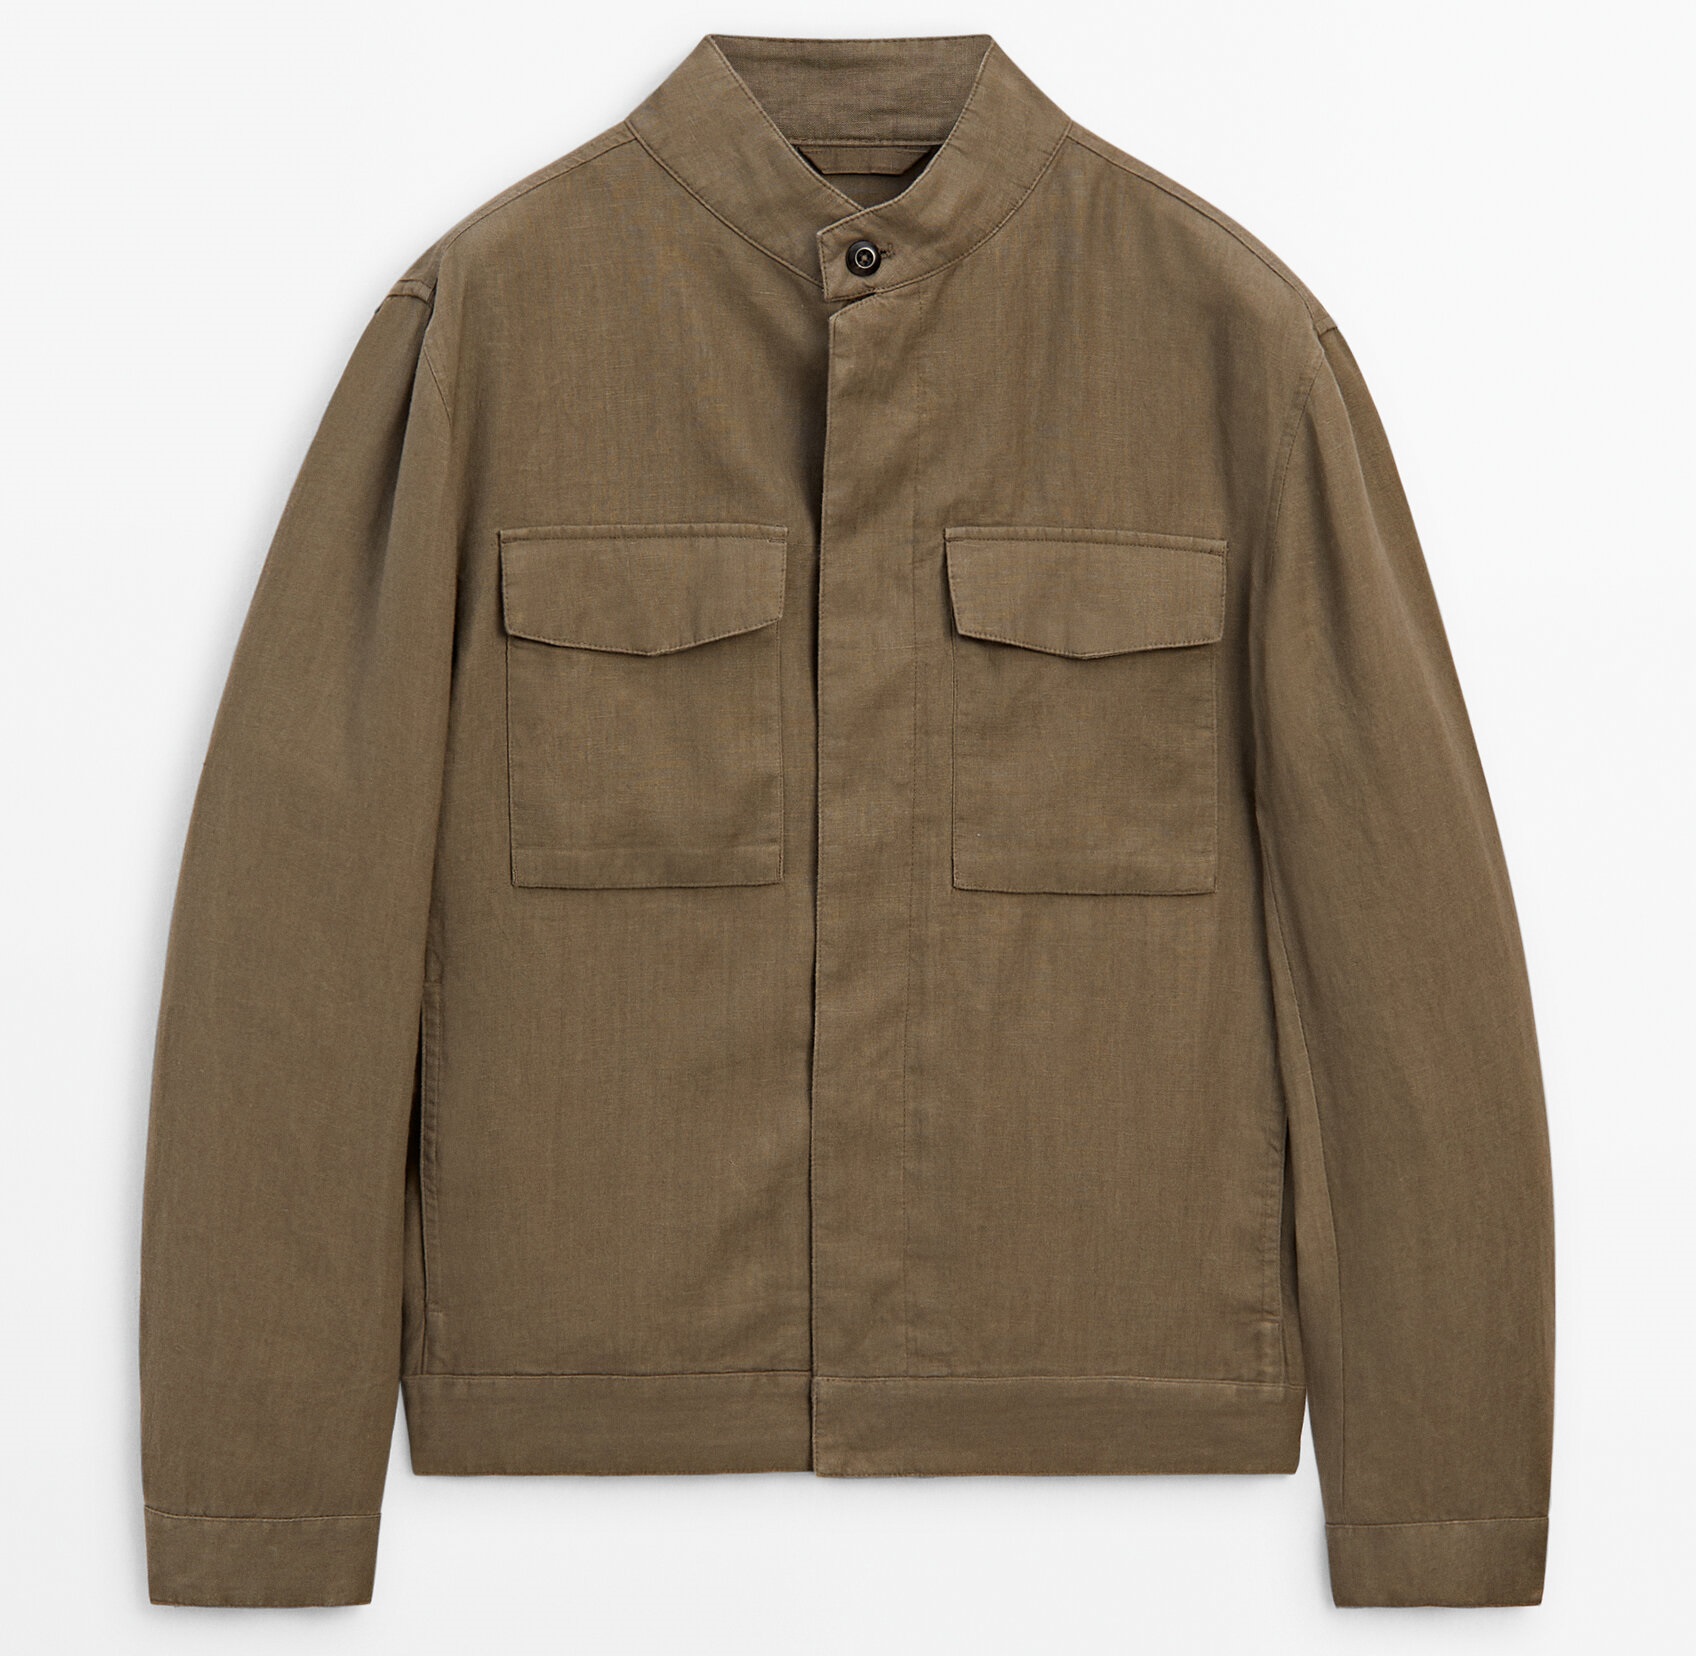 Куртка Massimo Dutti 100% Linen With Pockets, хаки куртка massimo dutti jacket with pockets бледный хаки